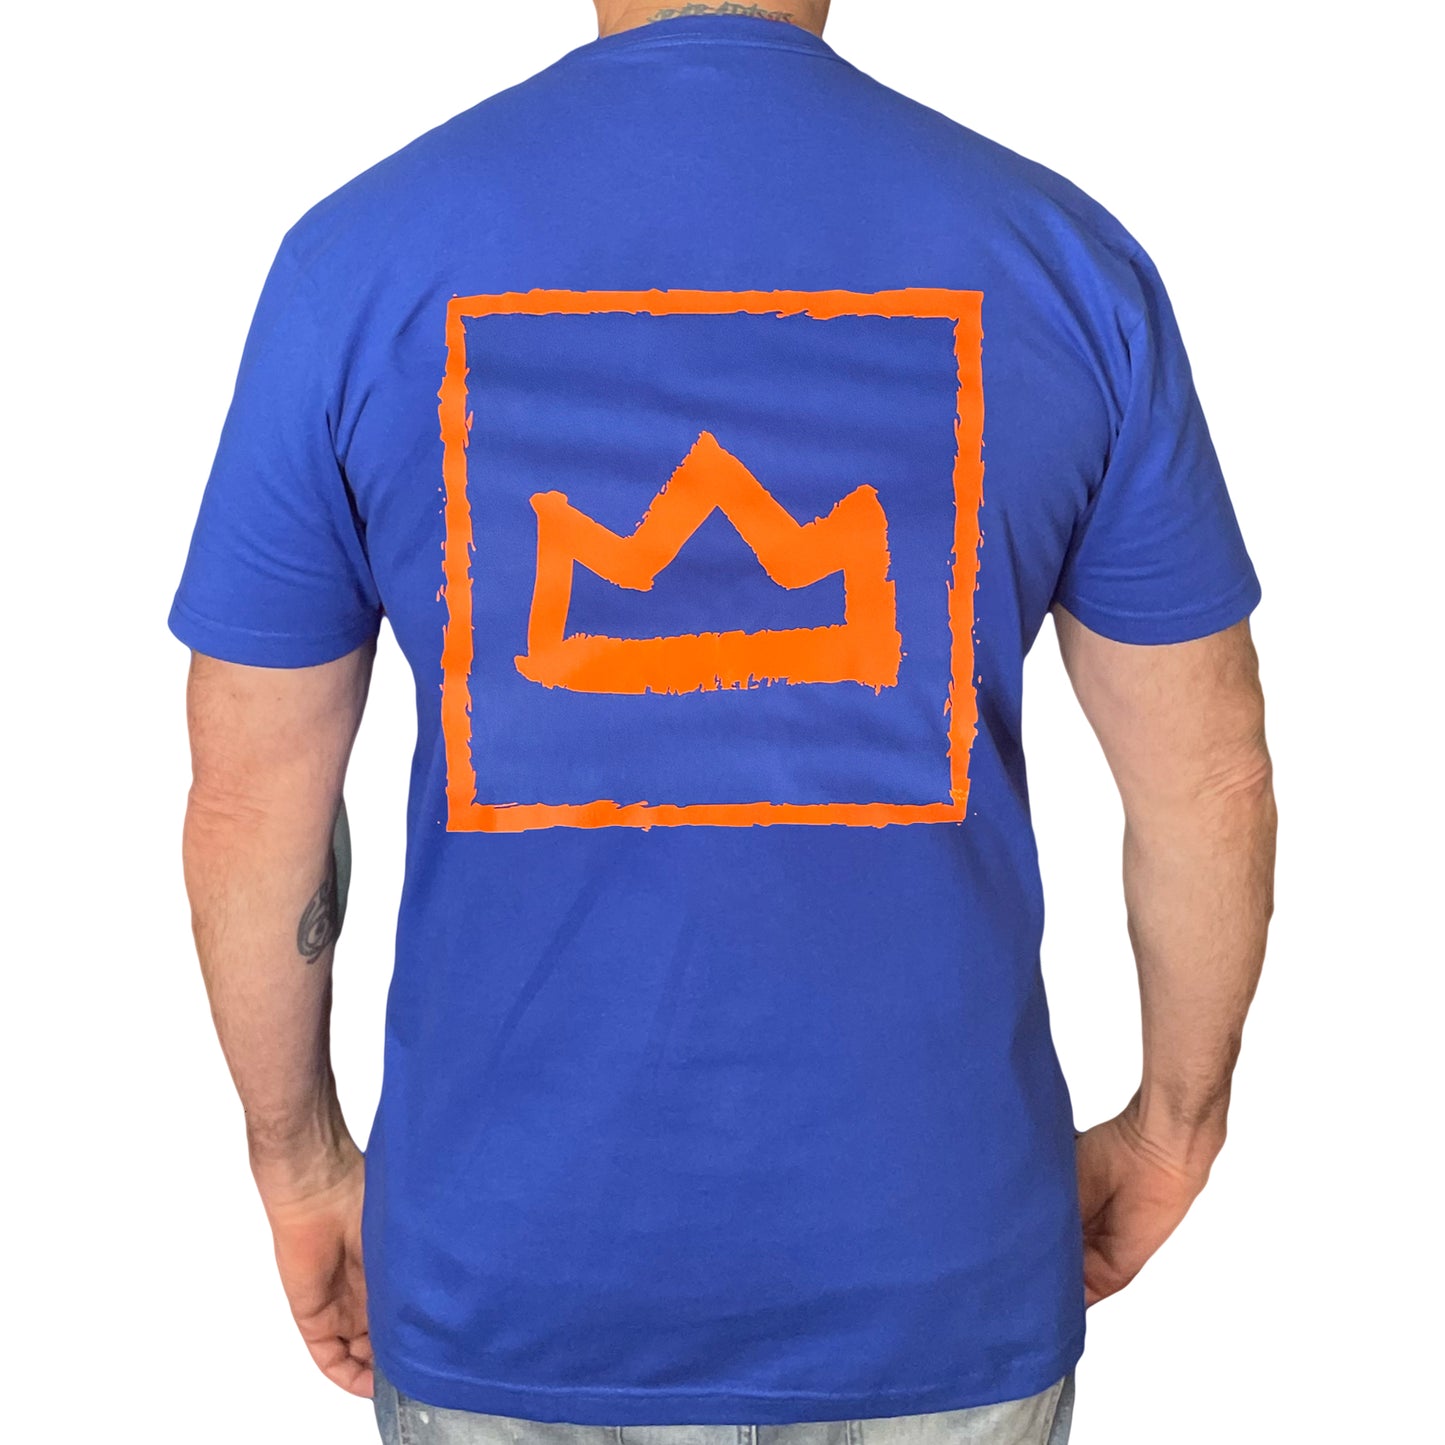 Crown Royale Orange and Royal Blue T-shirt